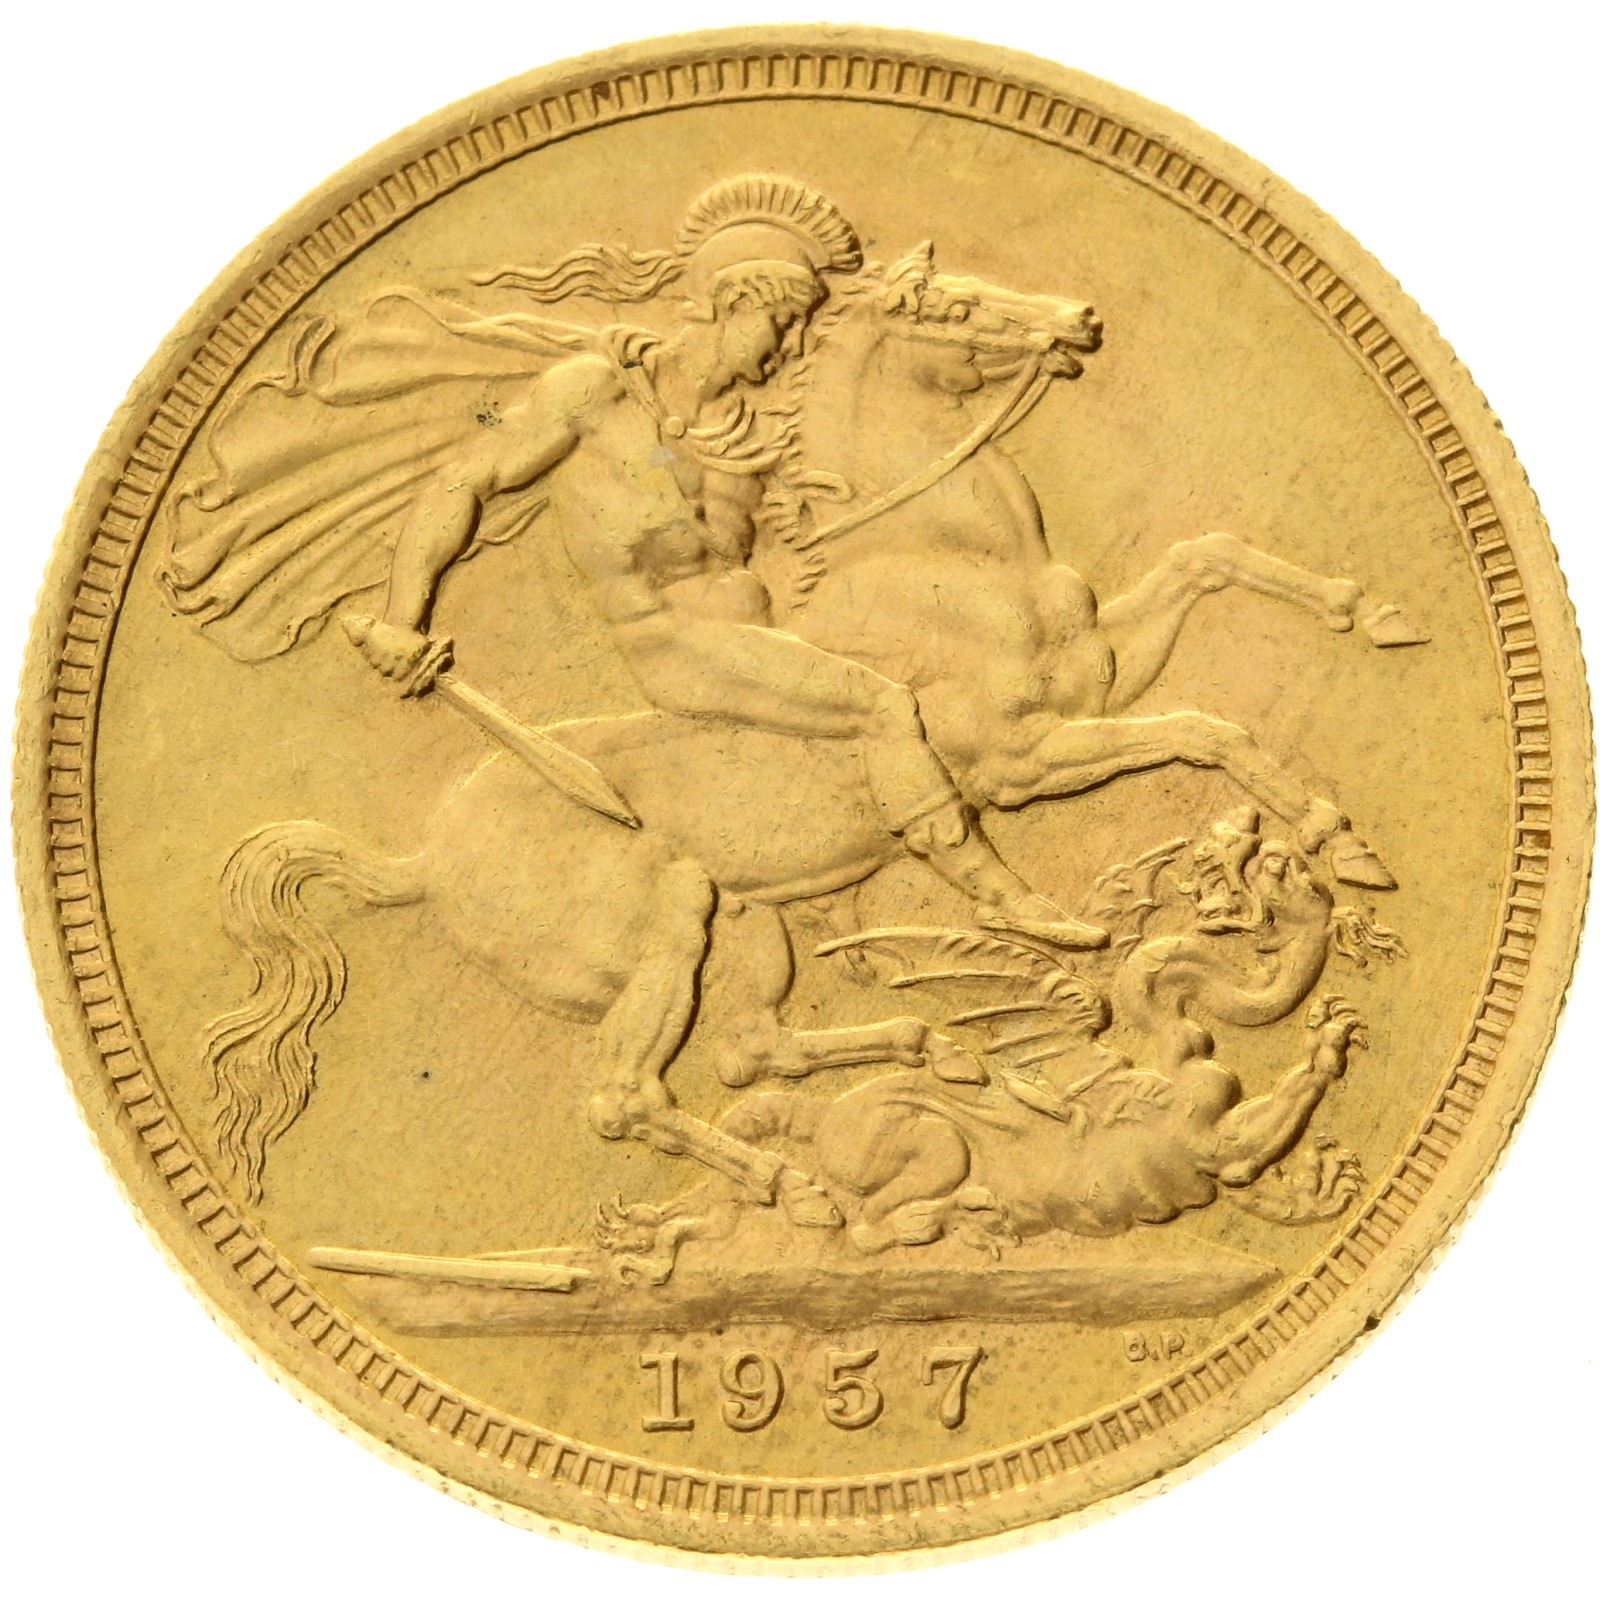 United Kingdom - 1 Sovereign - 1957 - Elizabeth II